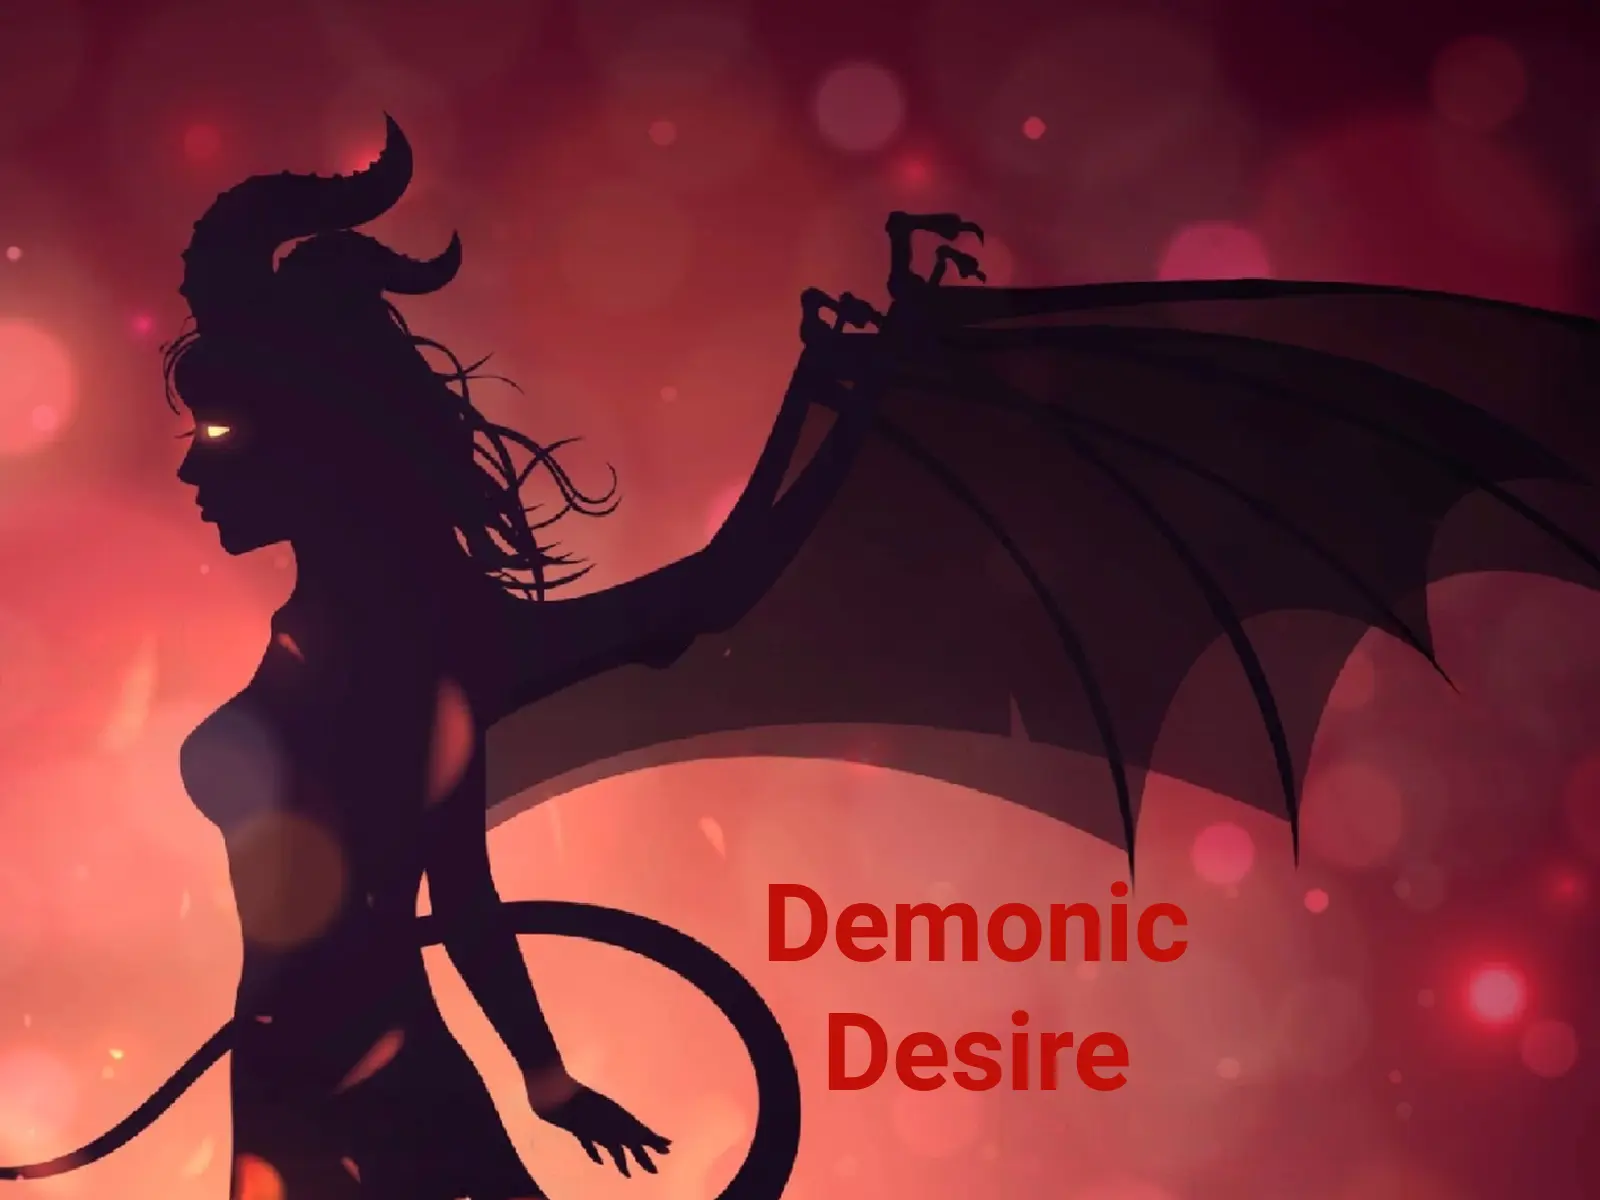 Demonic Desire main image